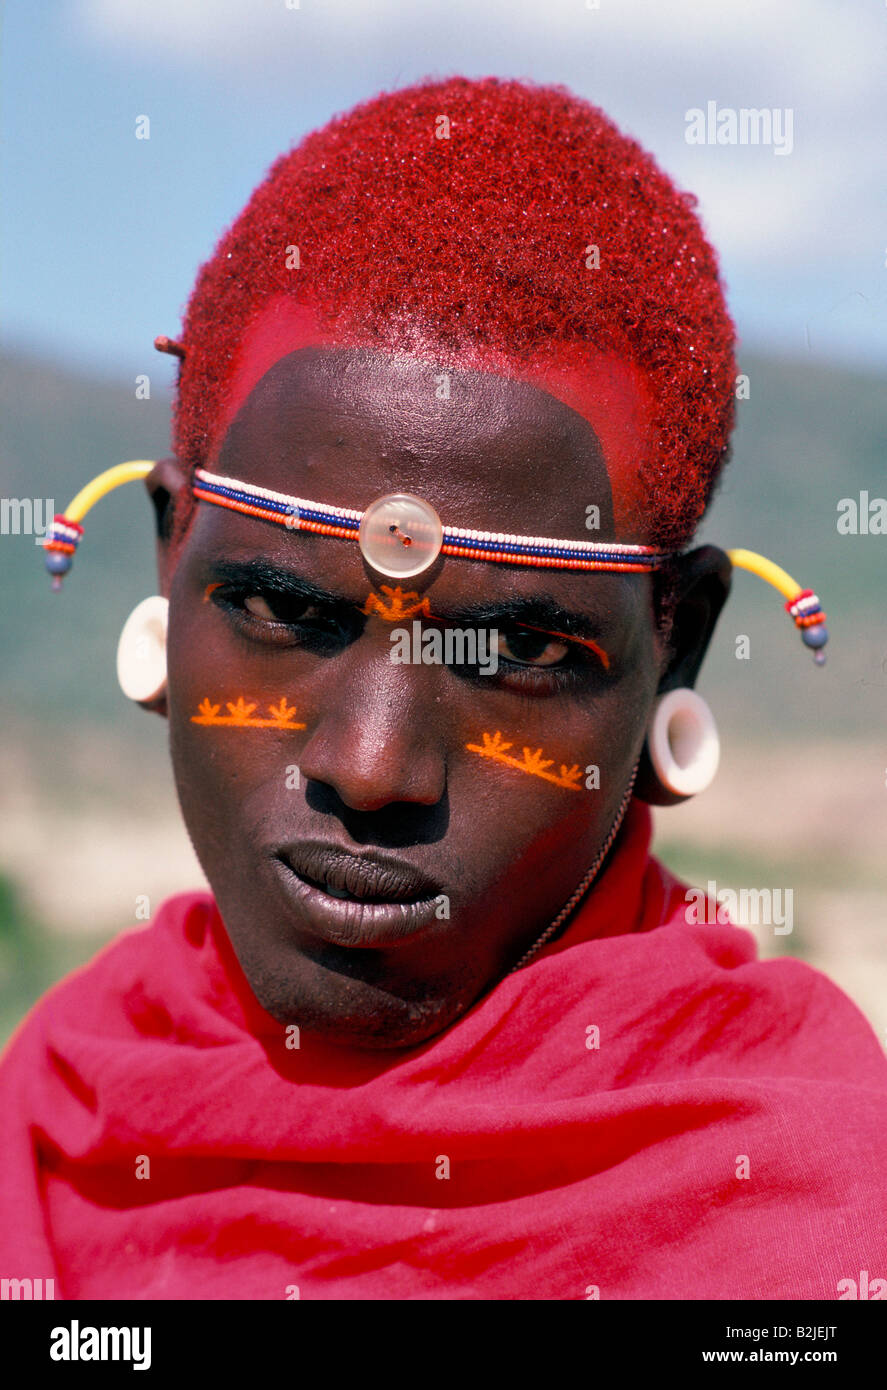 Samburu man in traditional make up and costume, Kenya Stock Photo